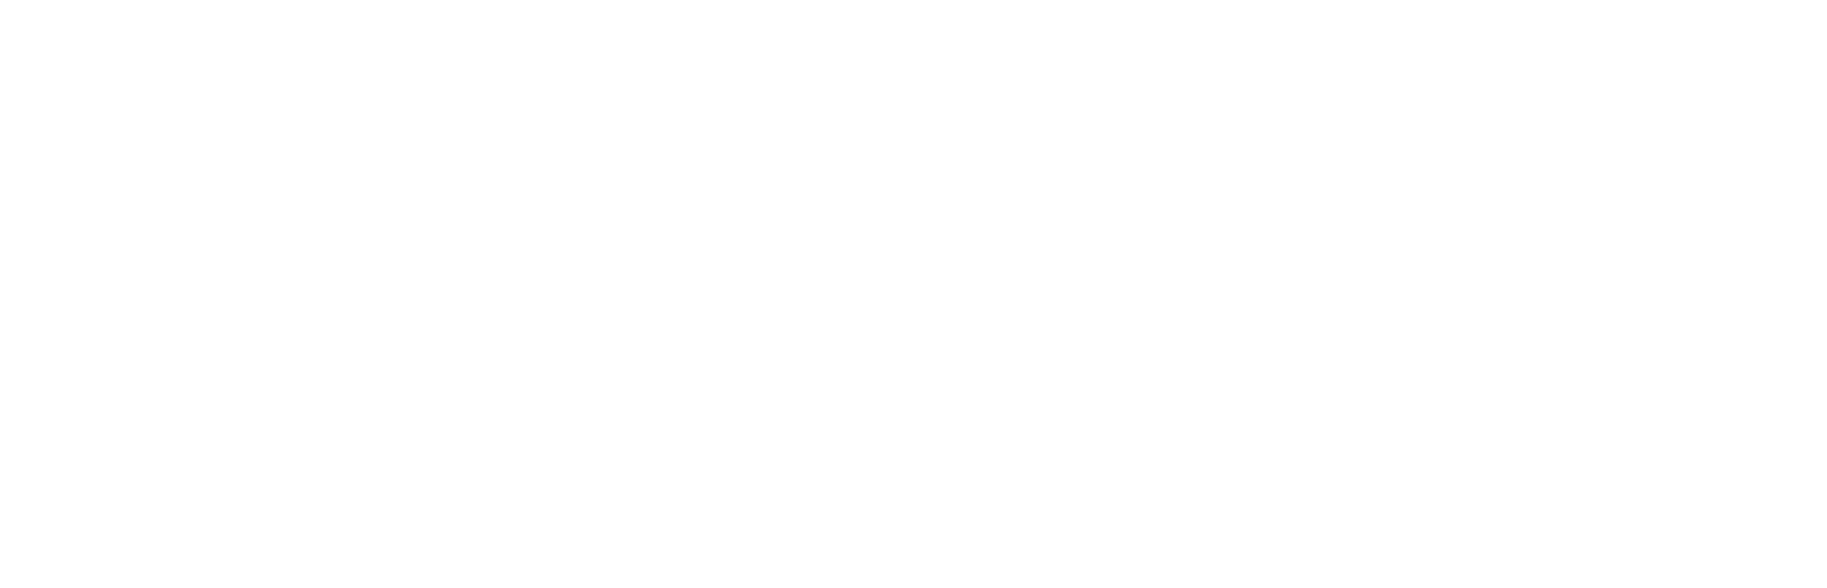 Torrid logo pour fonds sombres (PNG transparent)